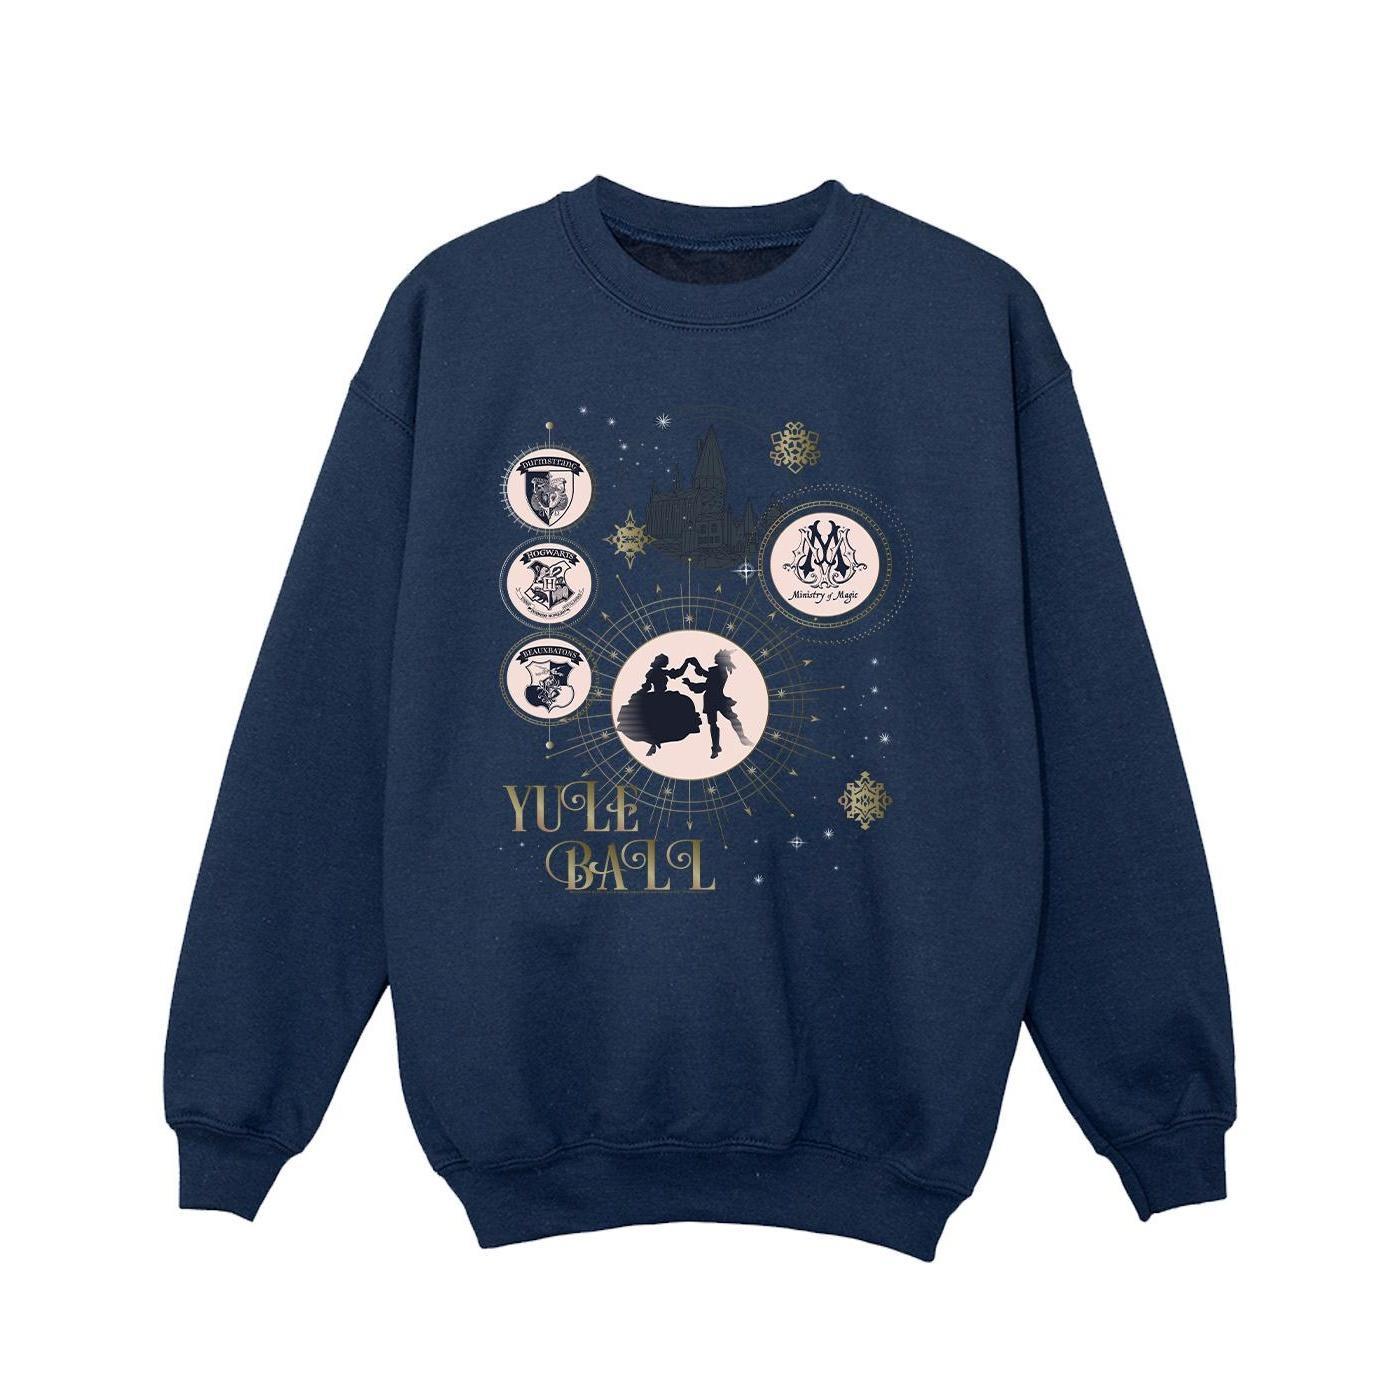 Harry Potter Girls Yule Ball Sweatshirt (Navy Blue) (5-6 Years)